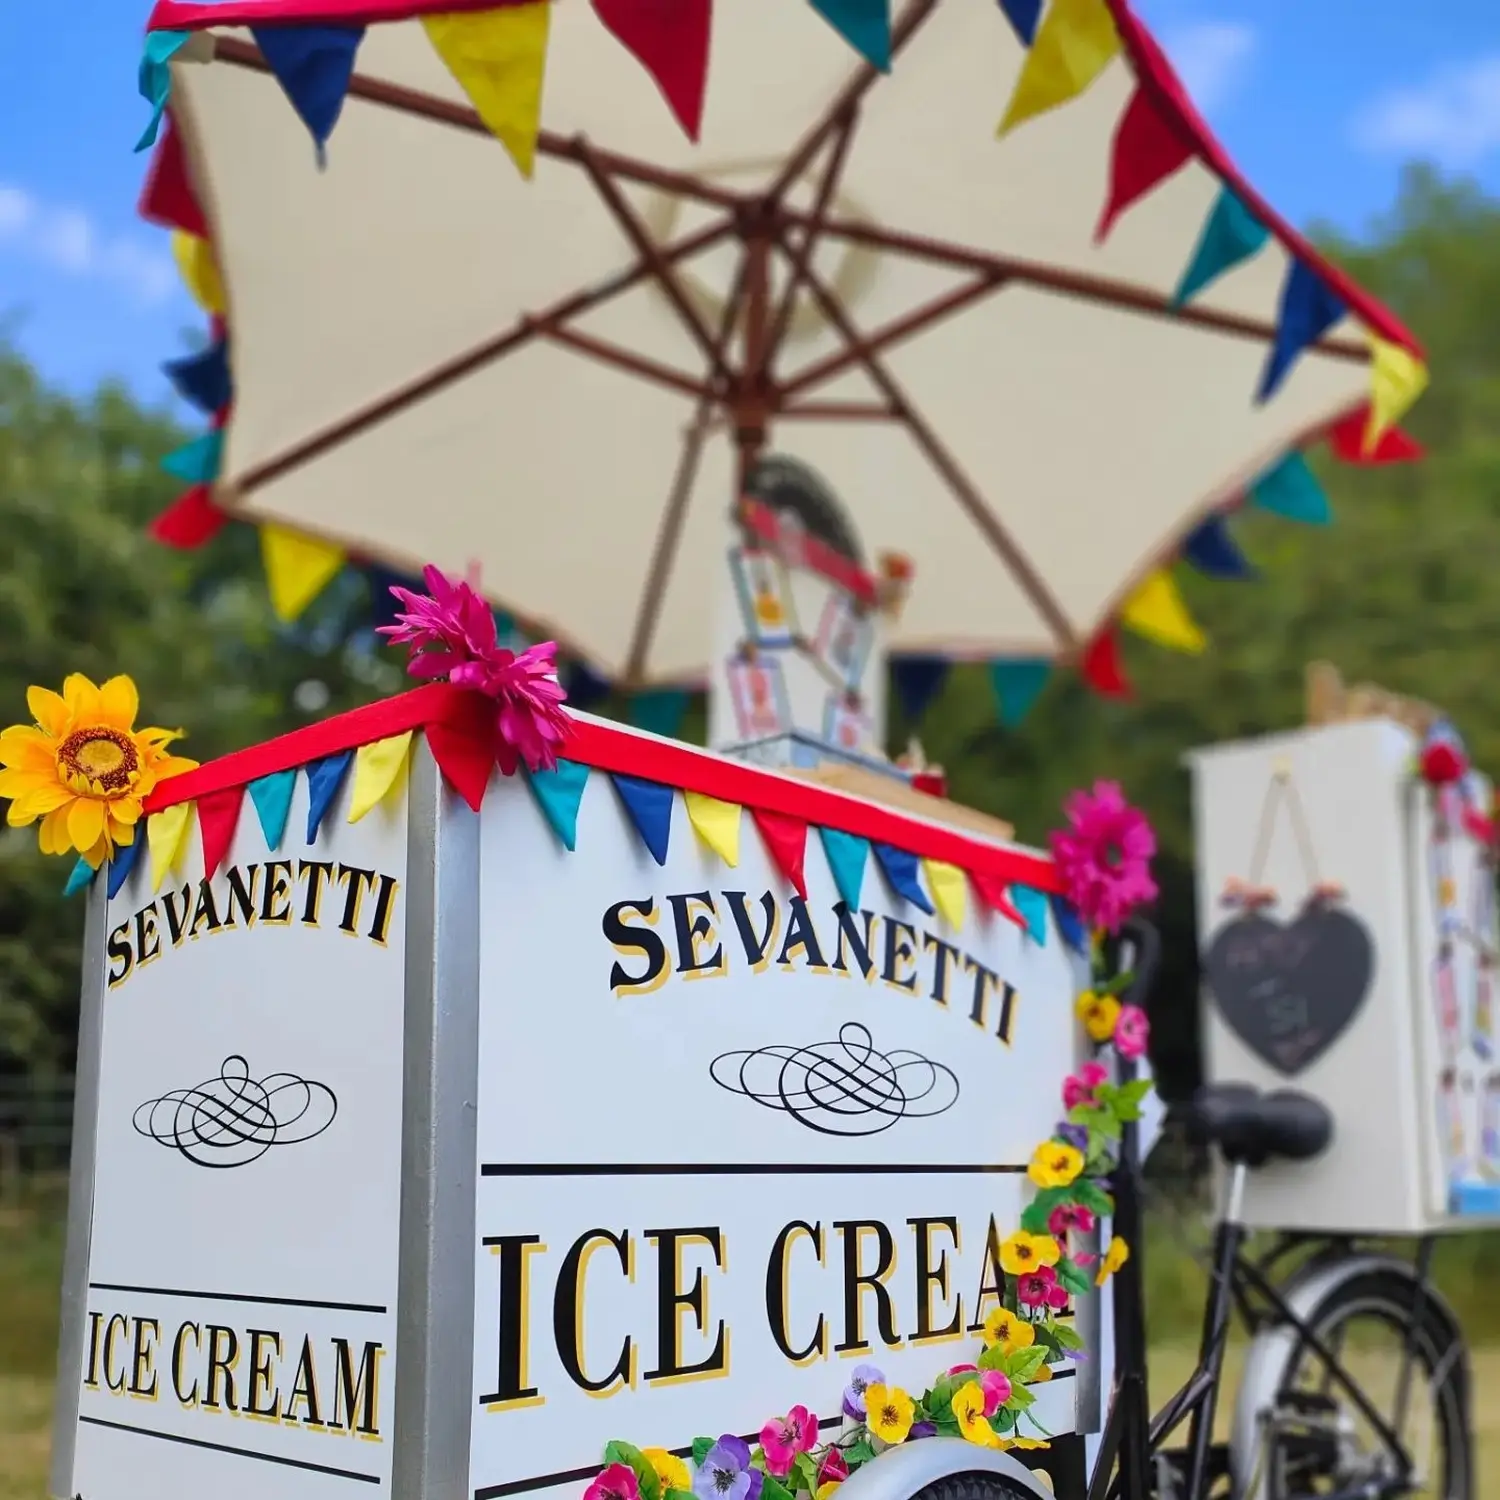 Sevanetti Ice Cream Bikes